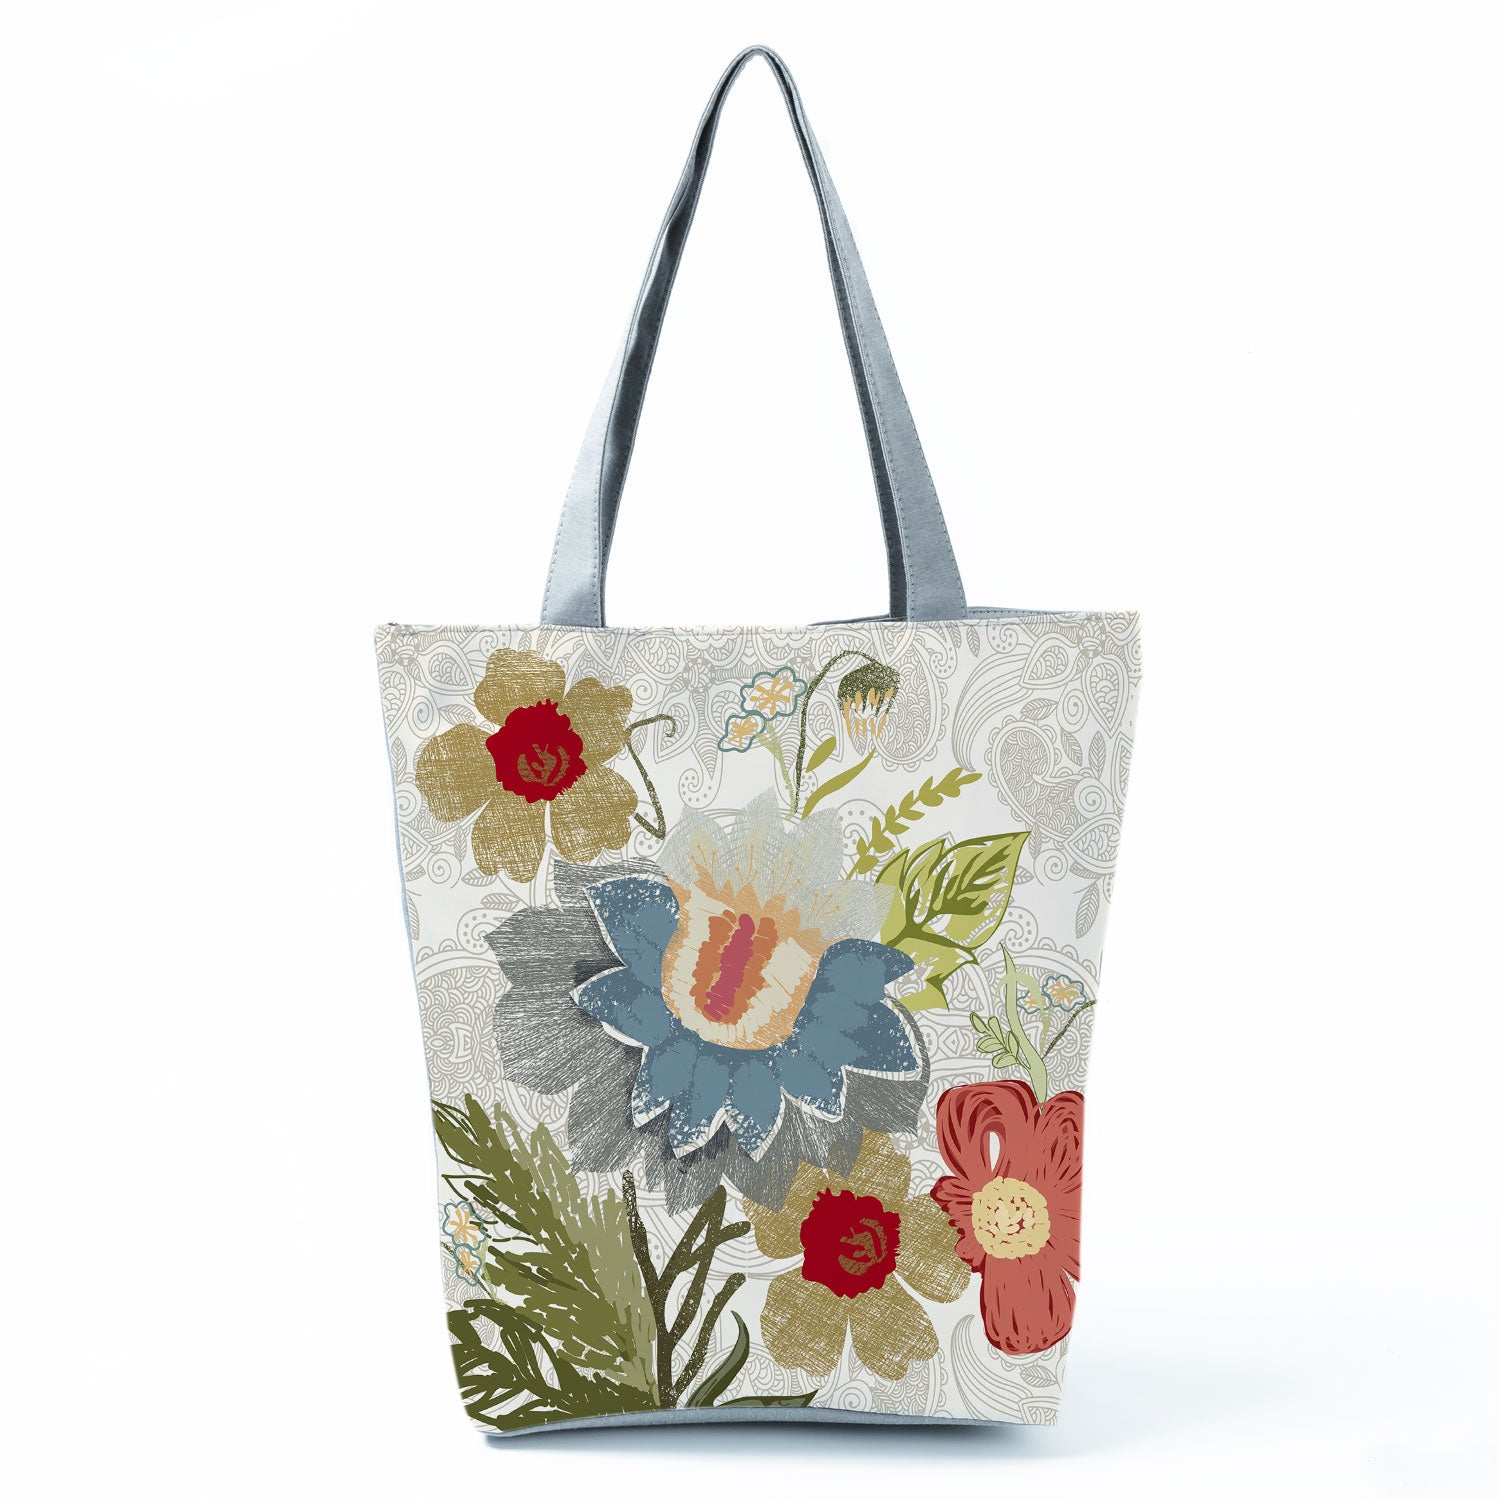 Miyahouse Floral Printed Handbag Women Shoulder Bag Canvas Summer Beach Bag Daily Use Female Shopping Bag Lady All-Match Eco